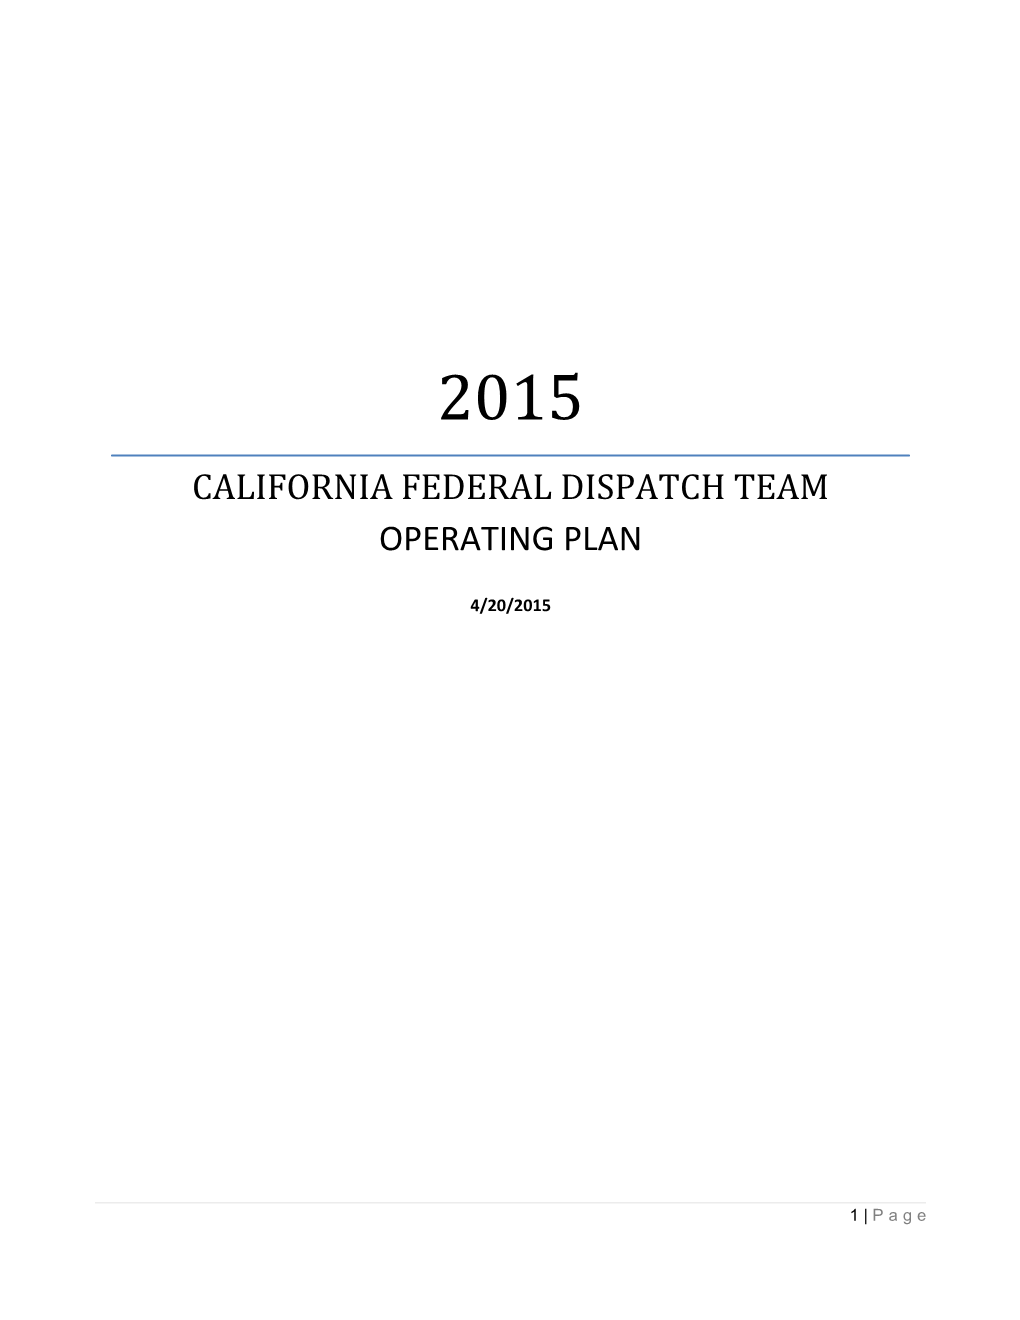 California Federal Dispatch Team